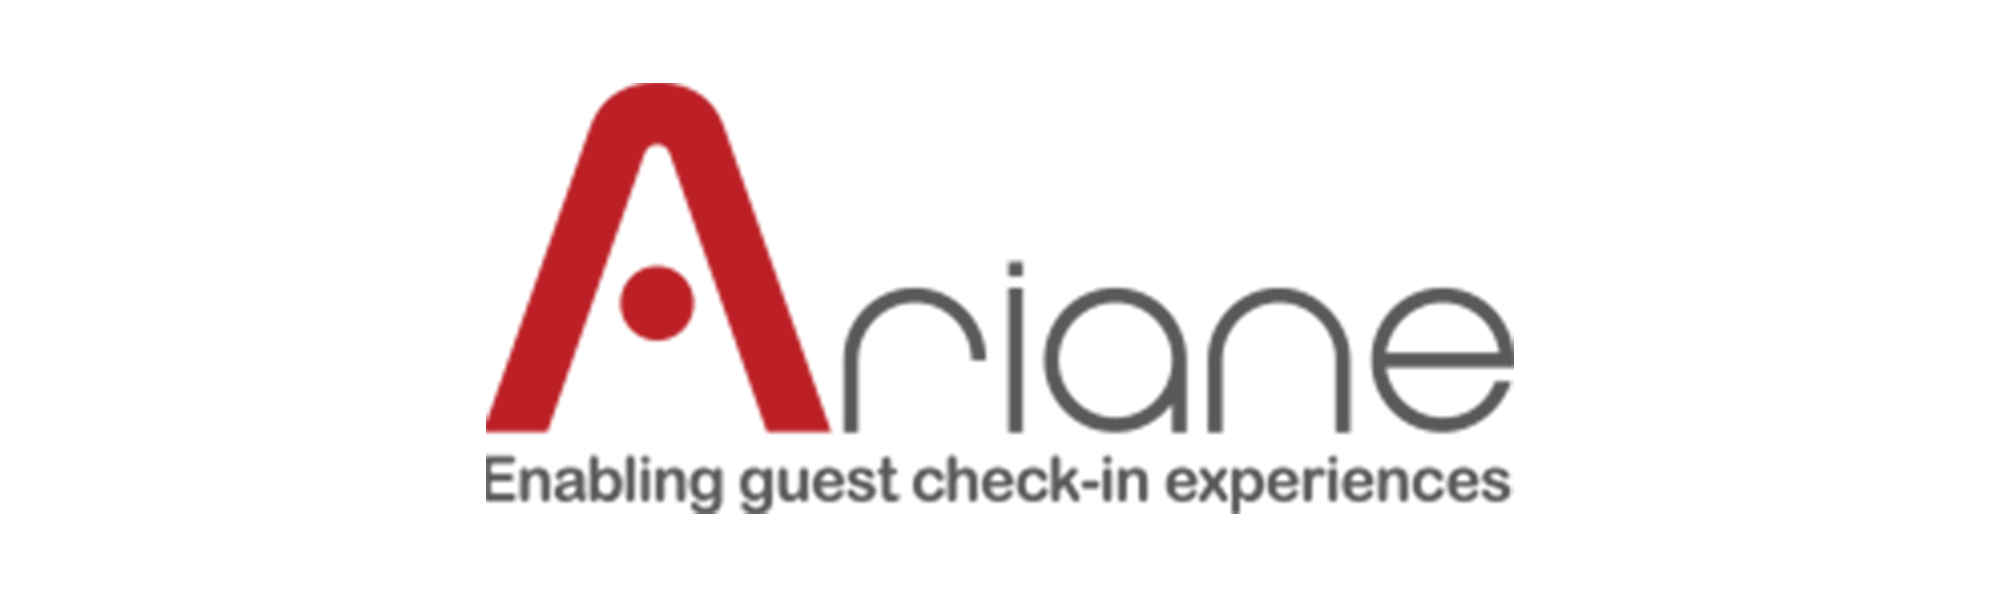 Ariane-Logo-present_2000x596